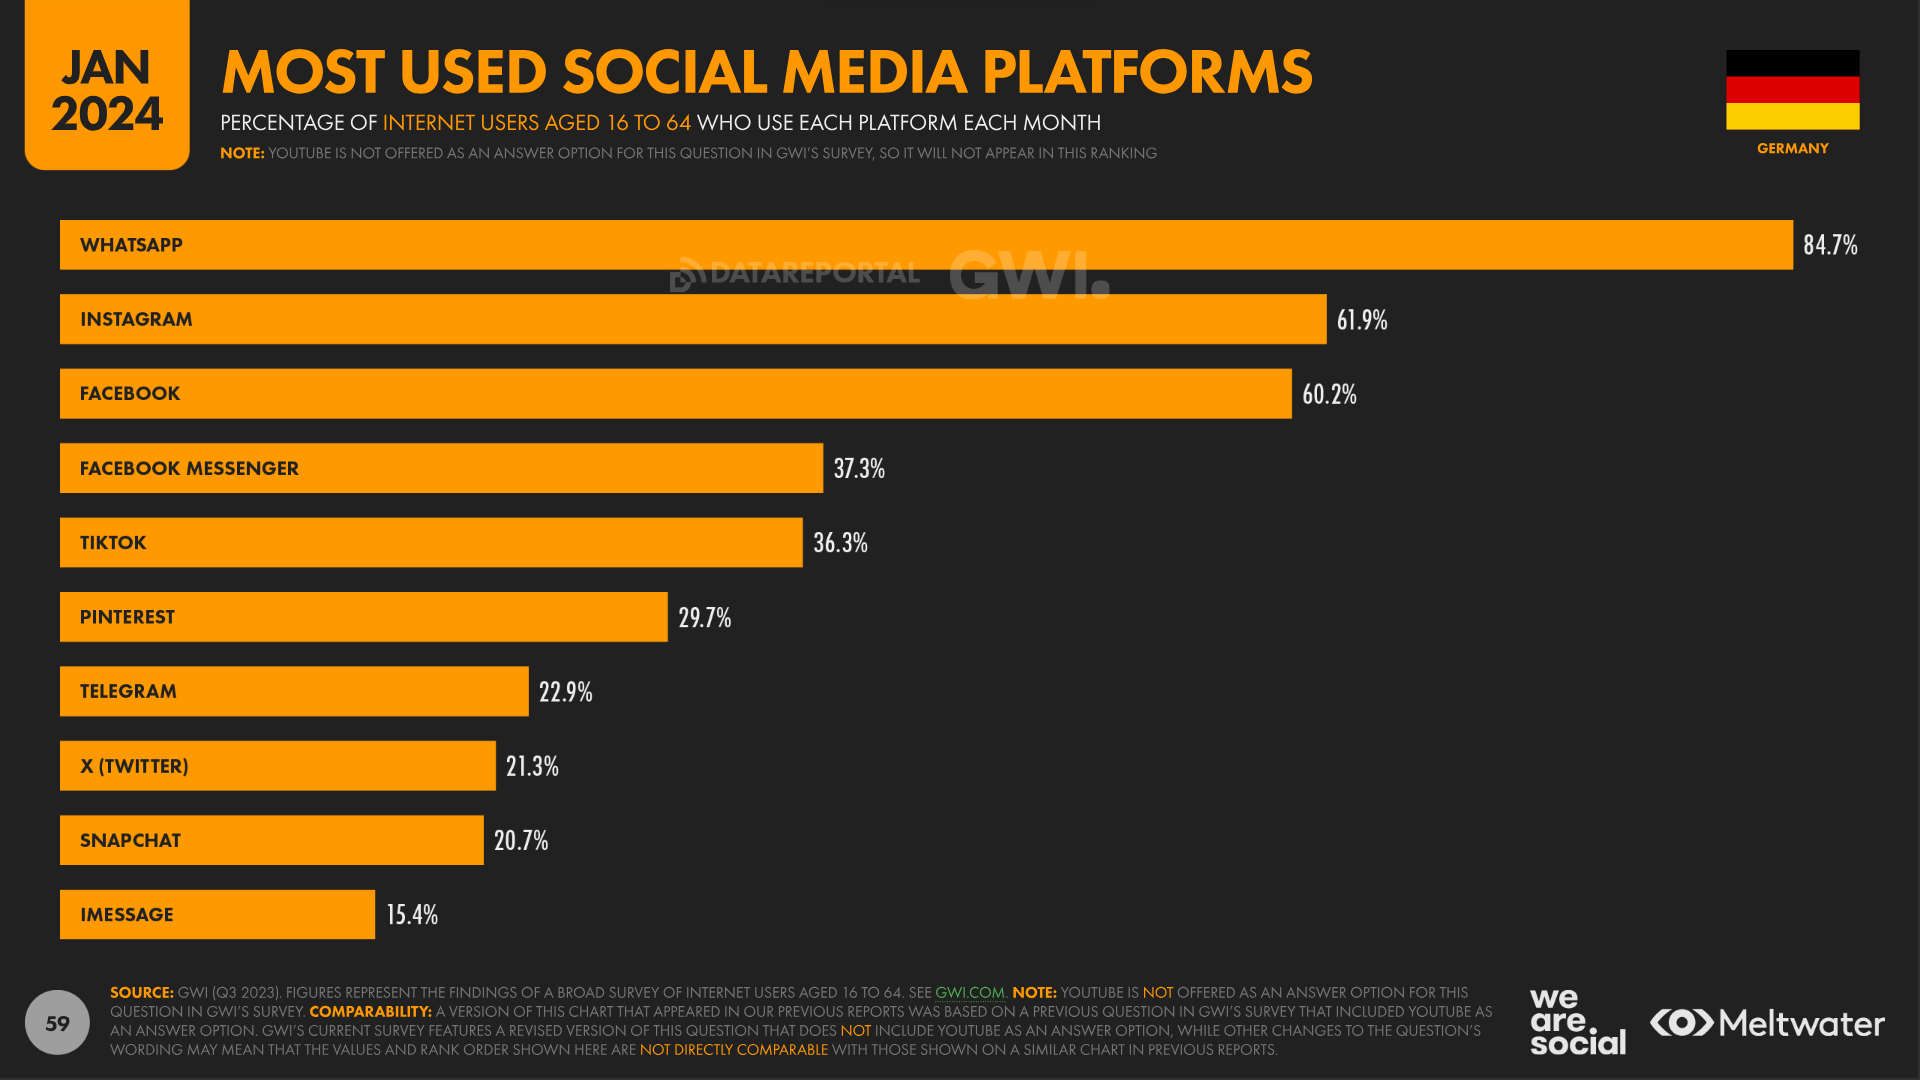 most used social media platforms Germany 2024